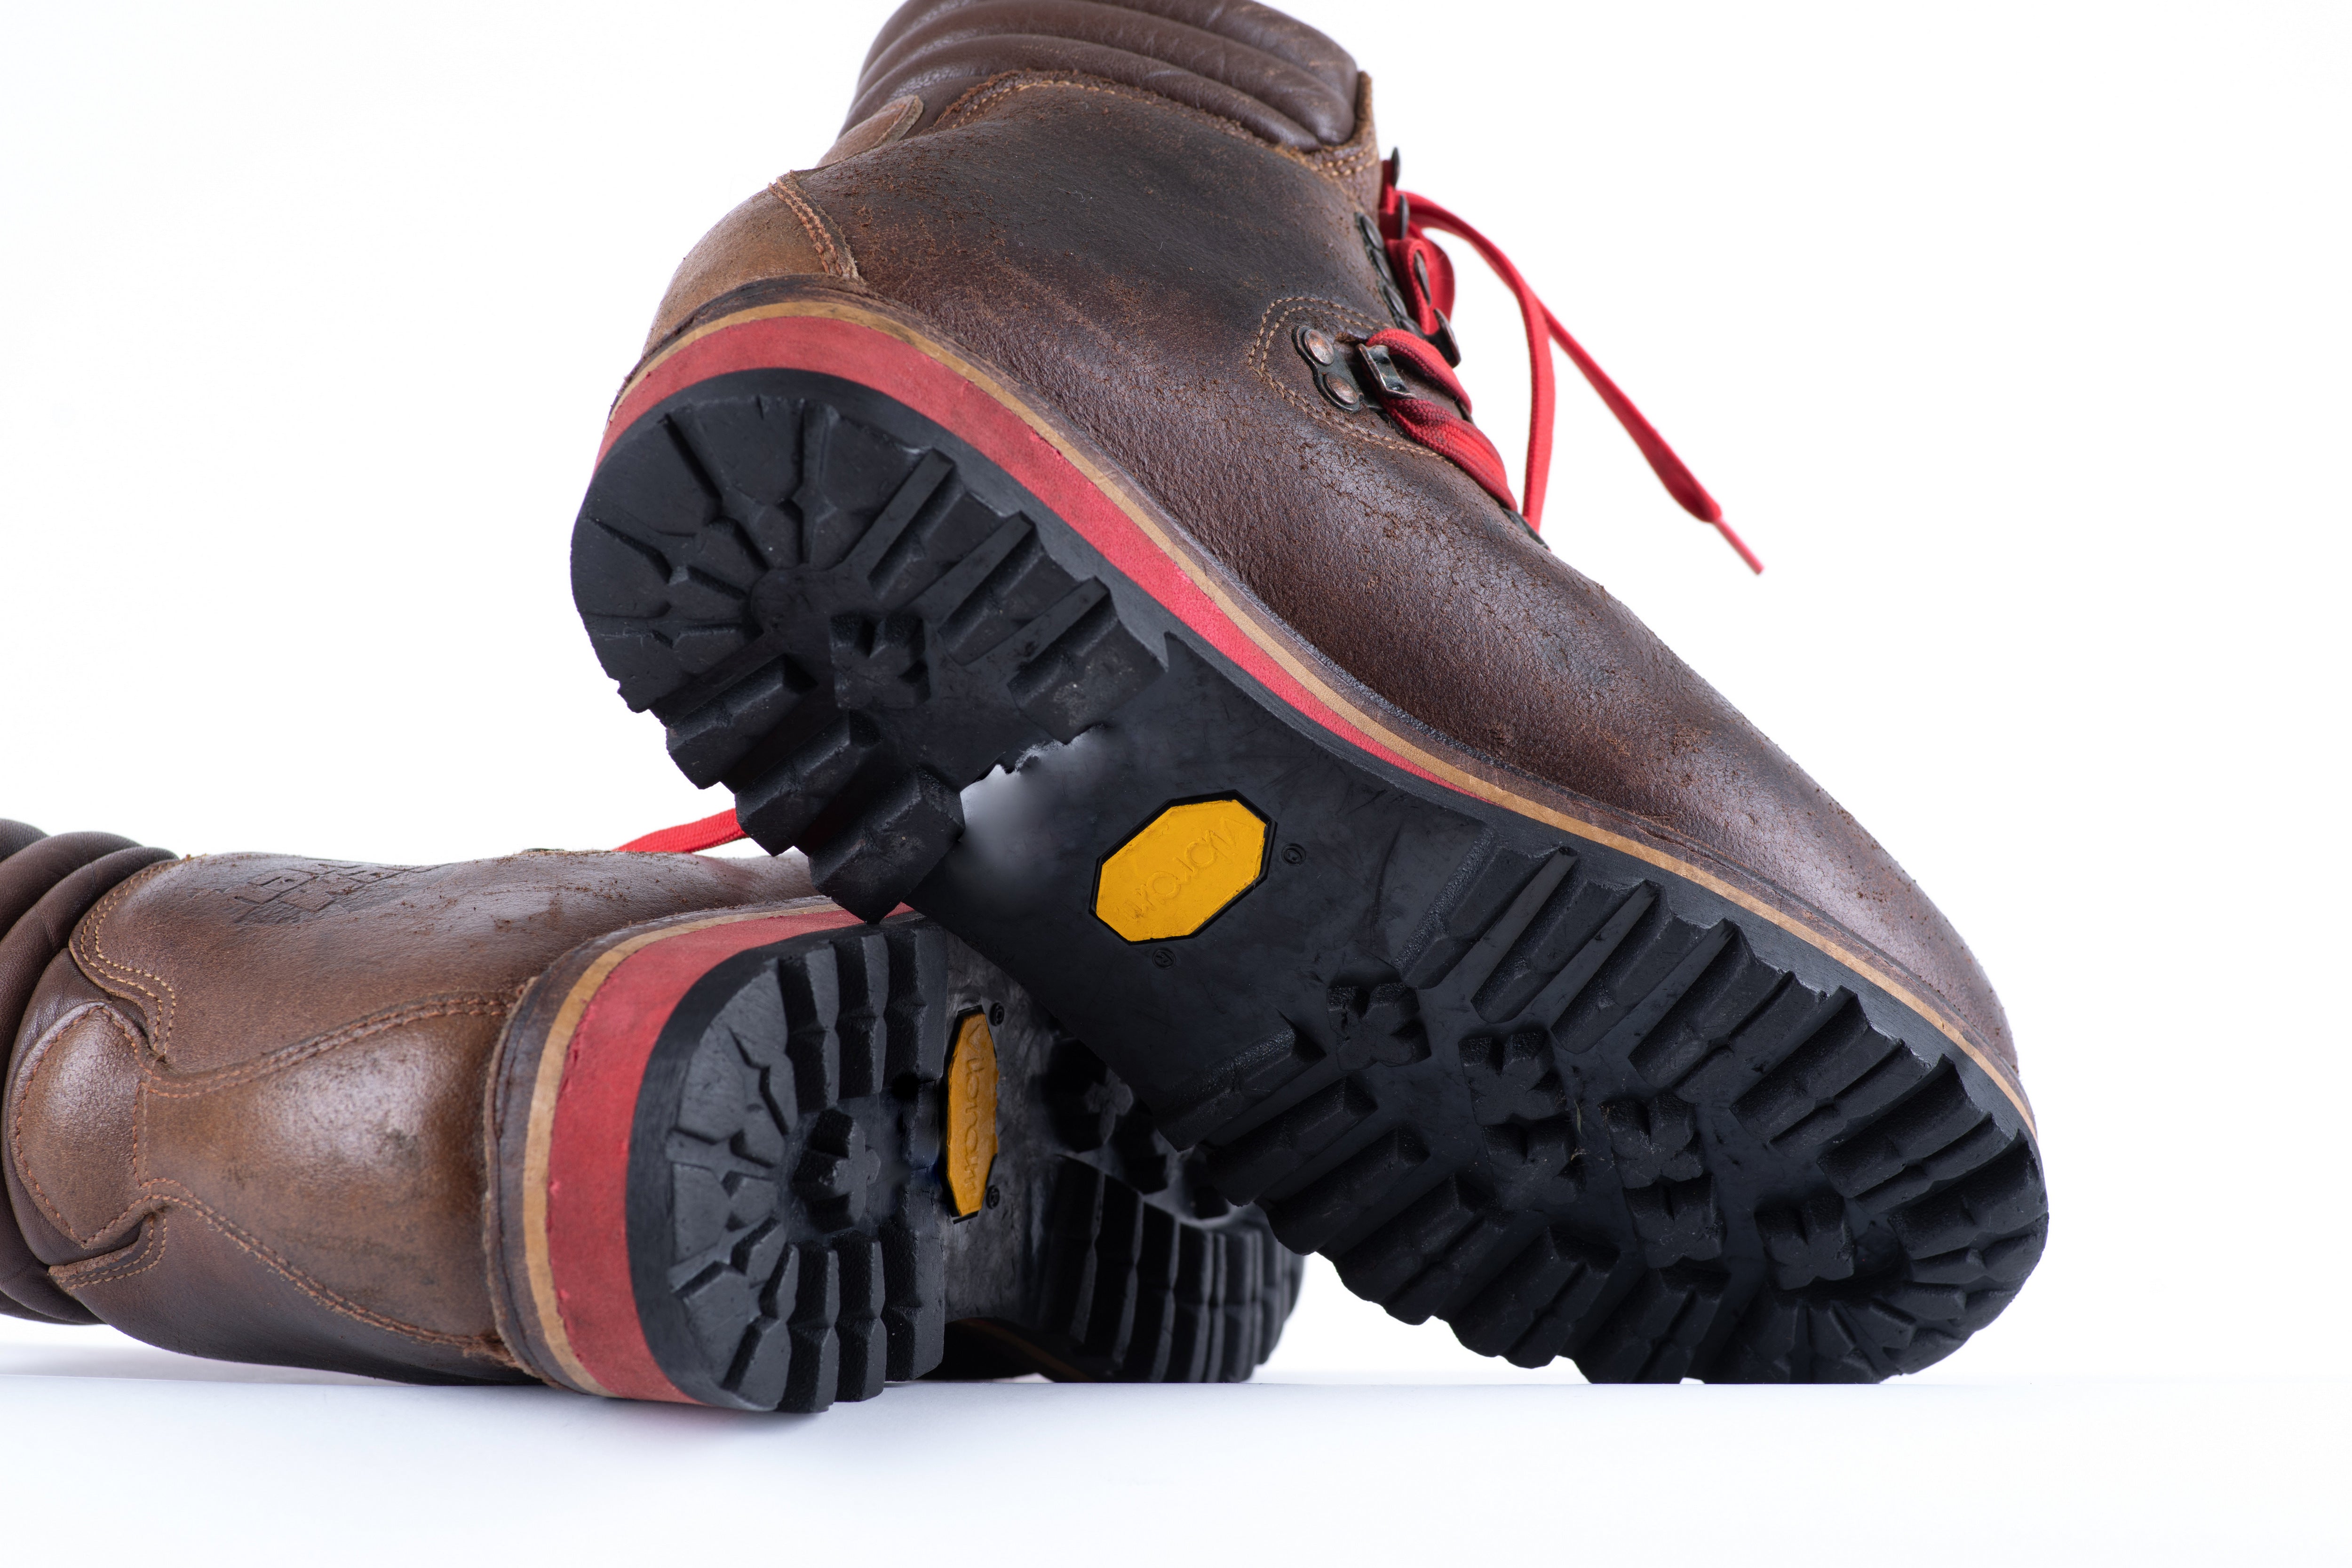 Hanwag Vintage Double Stitched Heavy Duty Hiking Boots, UK 8, US 9, EU 42